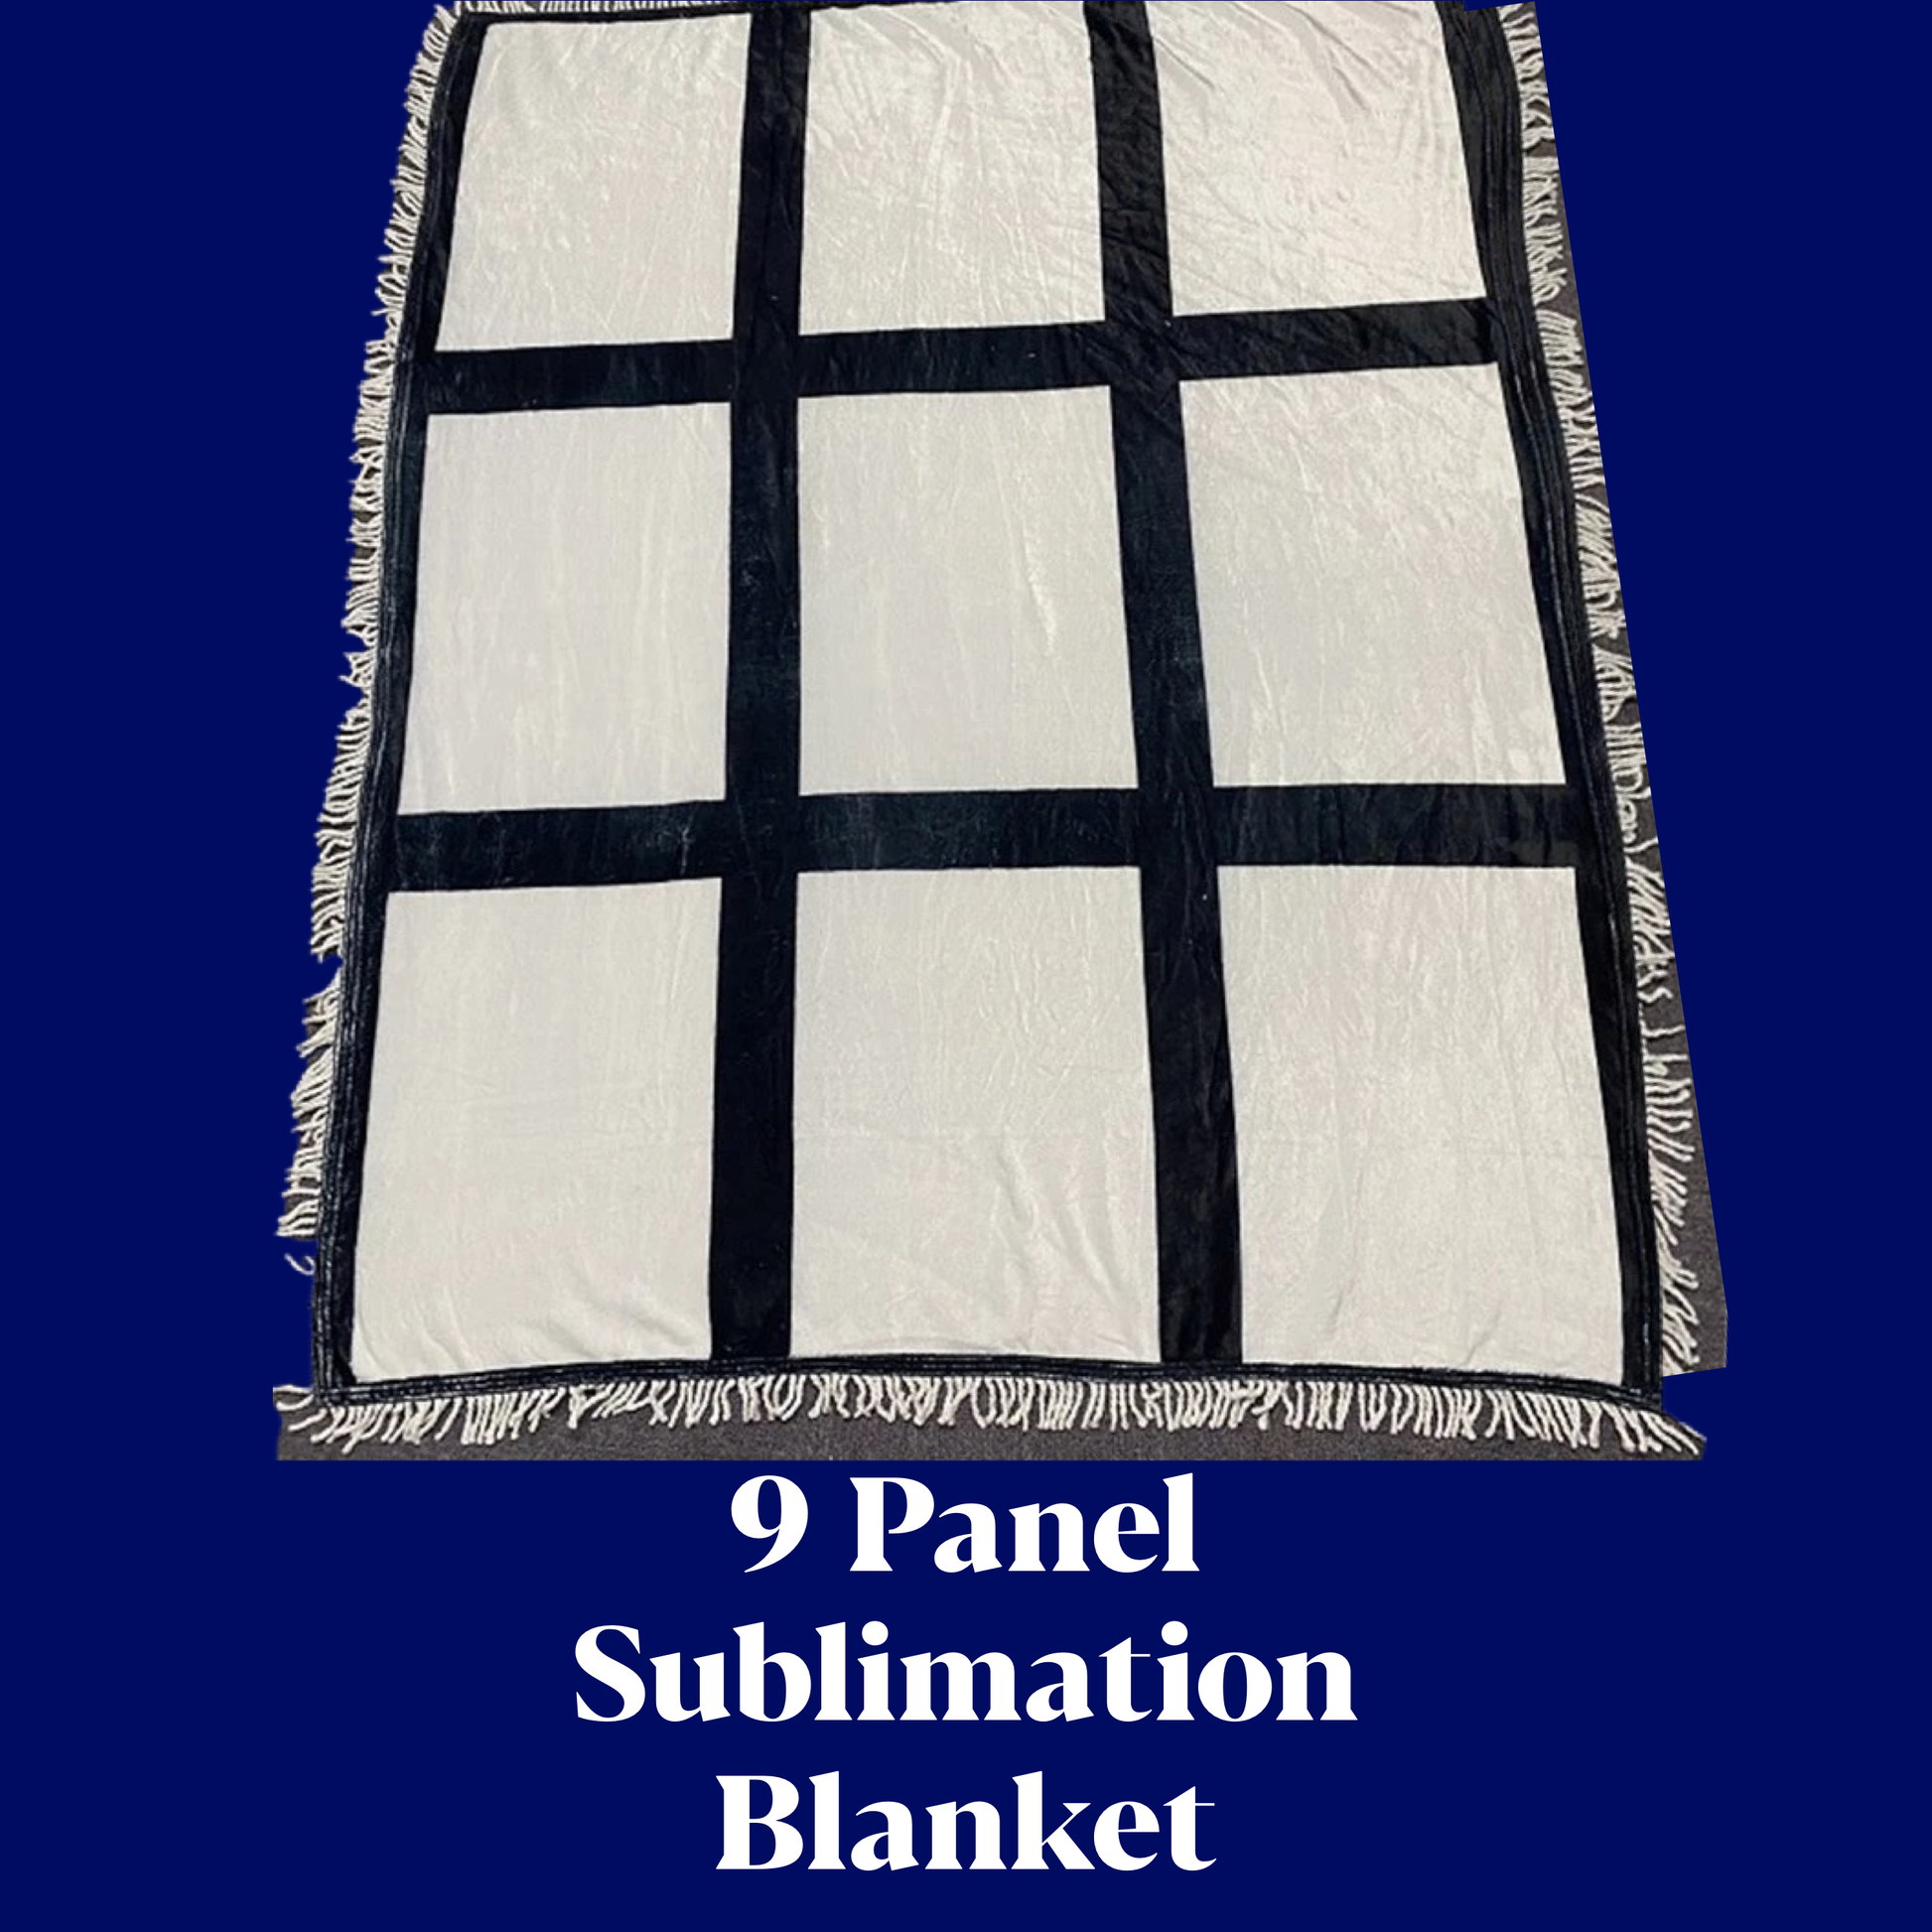 Sublimated Memory Blanket Memorial Blanket Panel Sublimation Blanket 